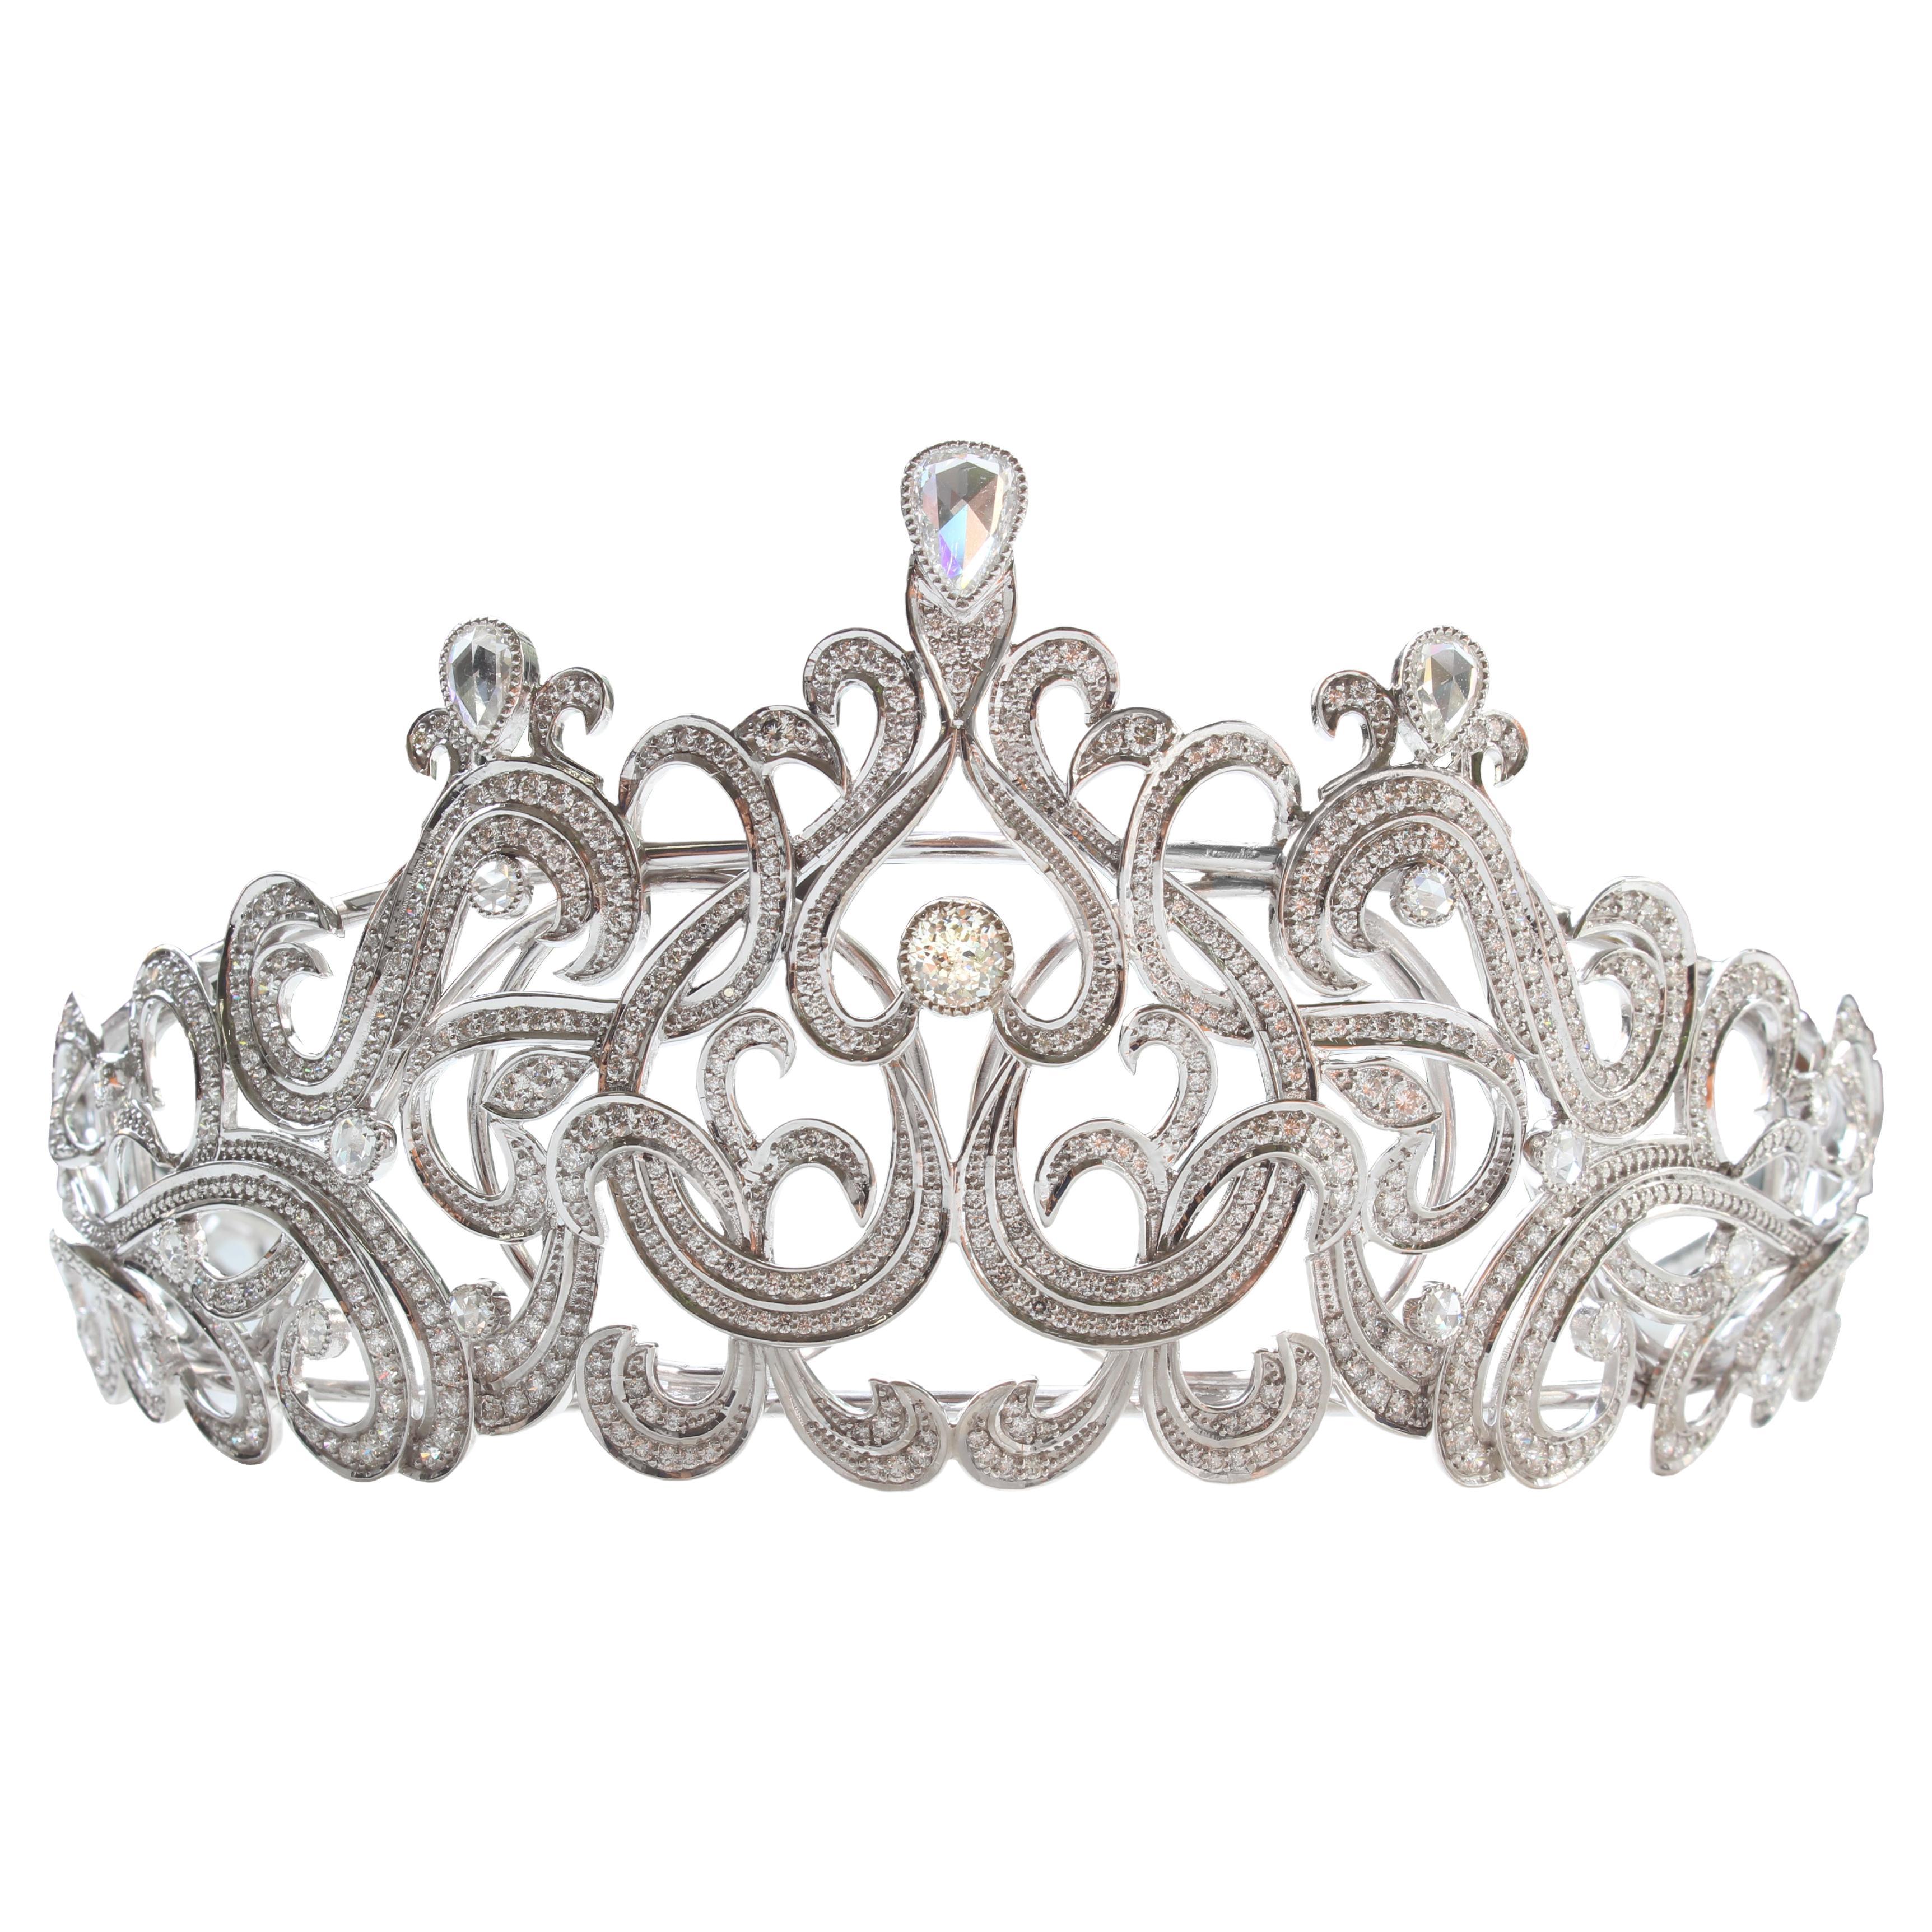 Crown Jubilee Diamond Tiara Encrusted with Diamonds Weighing 16.67ct 